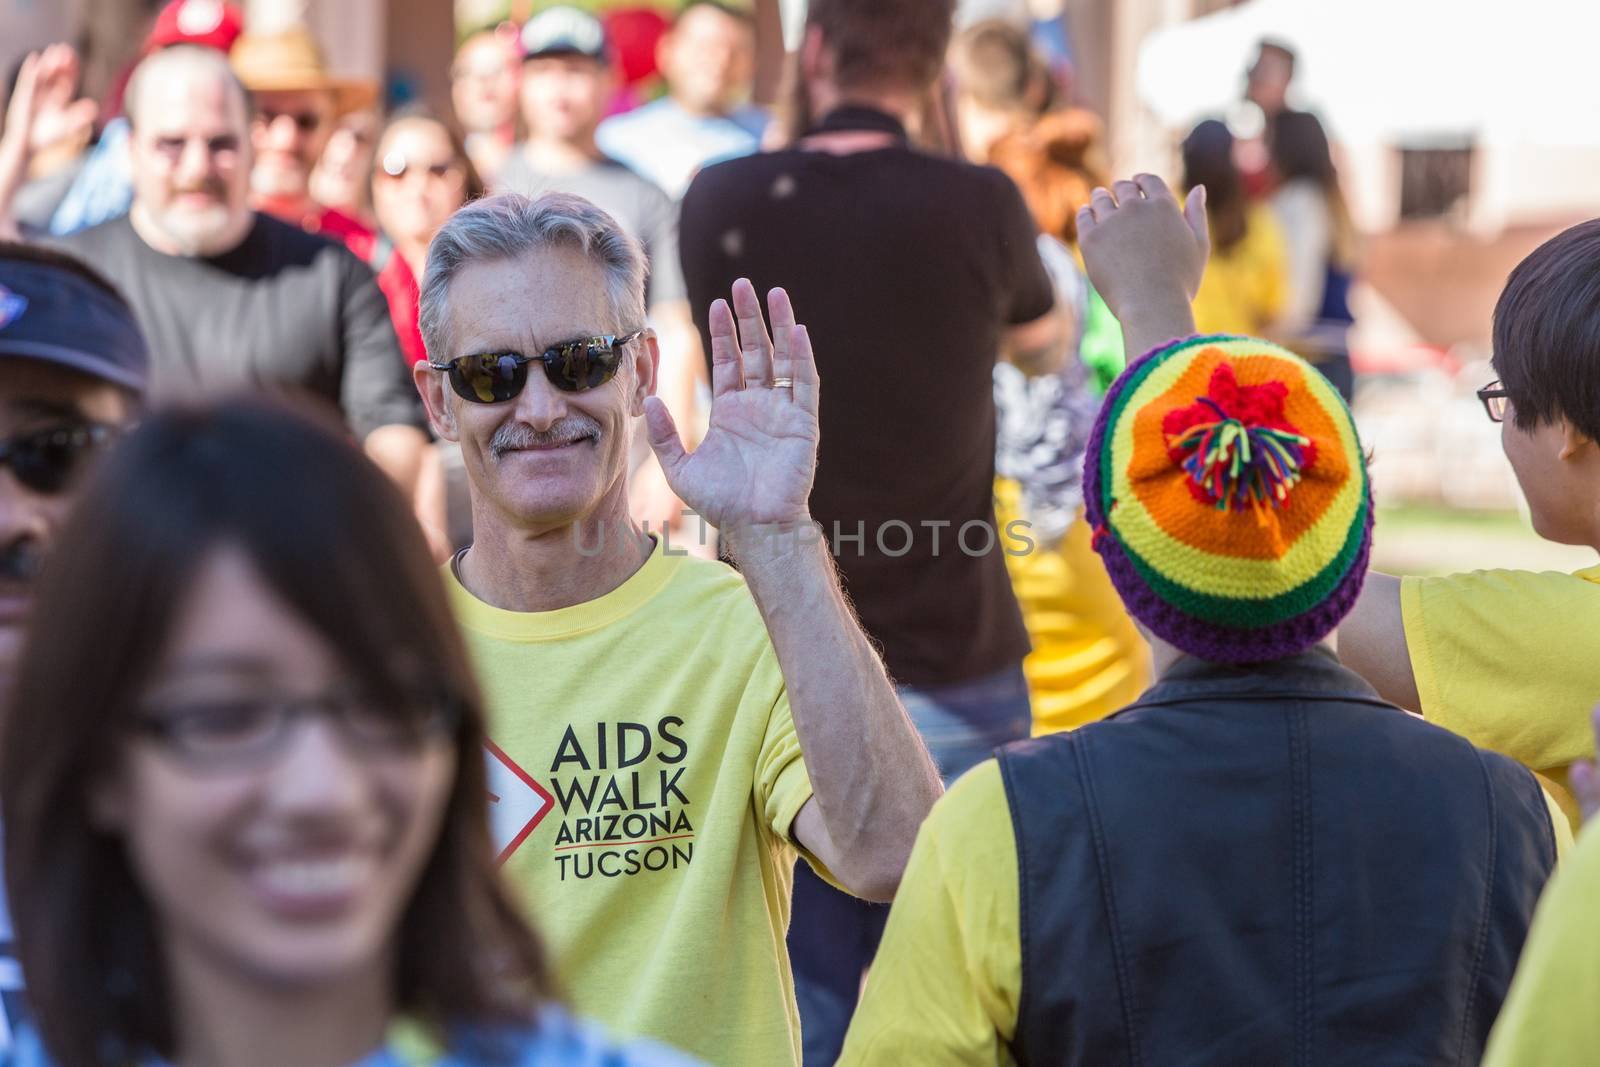 TUCSON, AZ/USA - OCTOBER 12:  Walker at AIDSwalk on October 12, 2014 in Tucson, Arizona, USA.